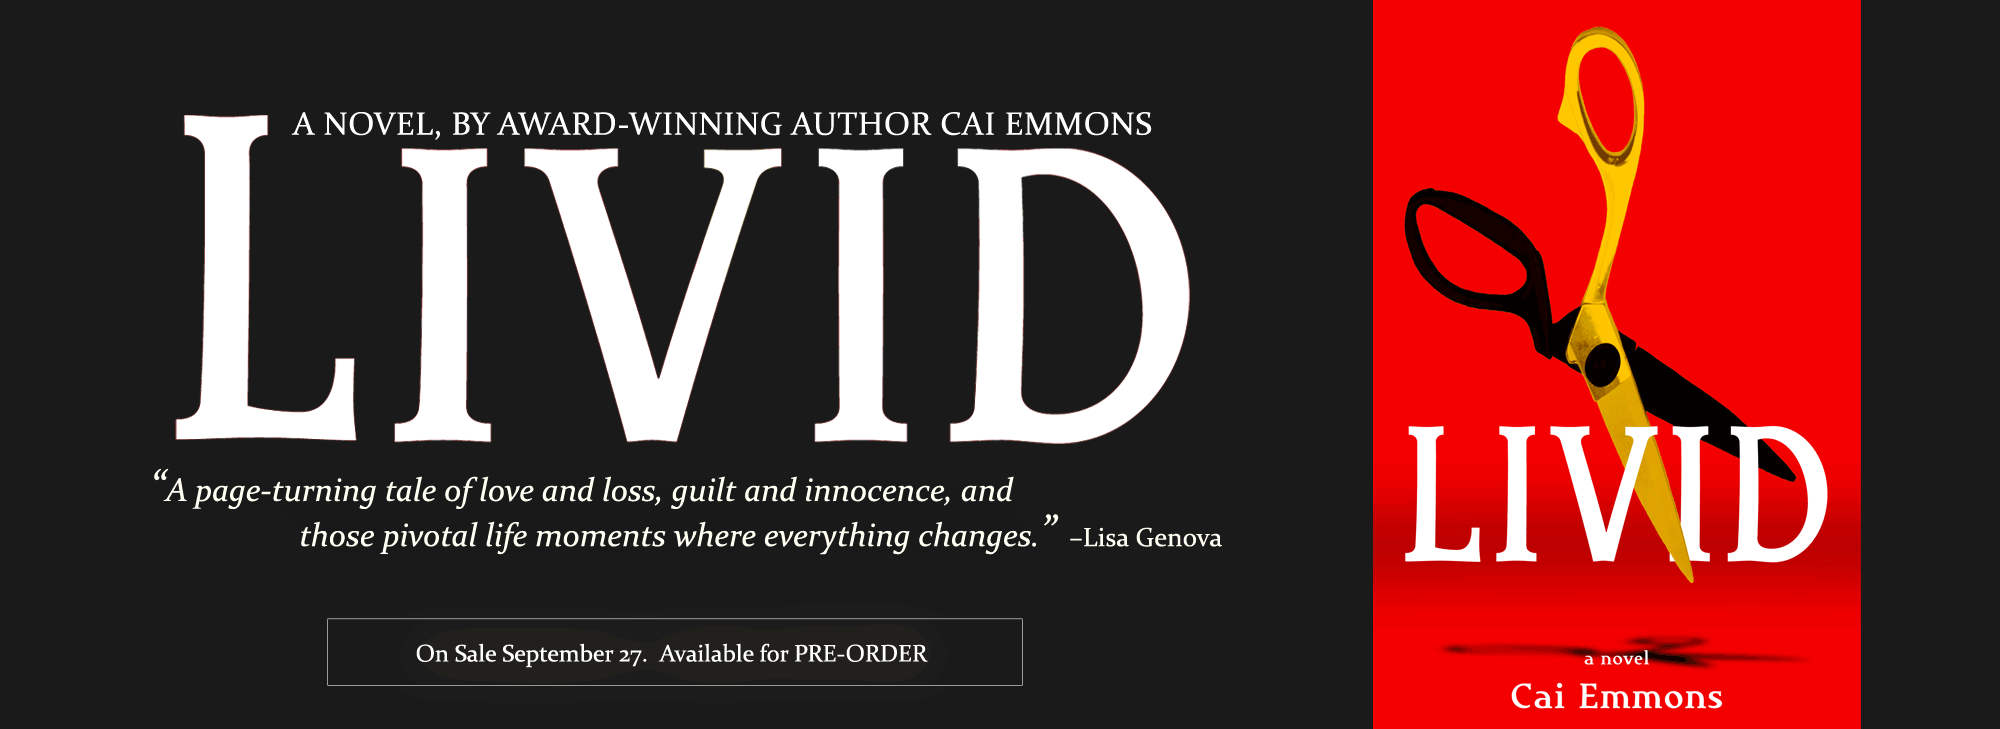 LIVID, a novel by author Cai Emmons